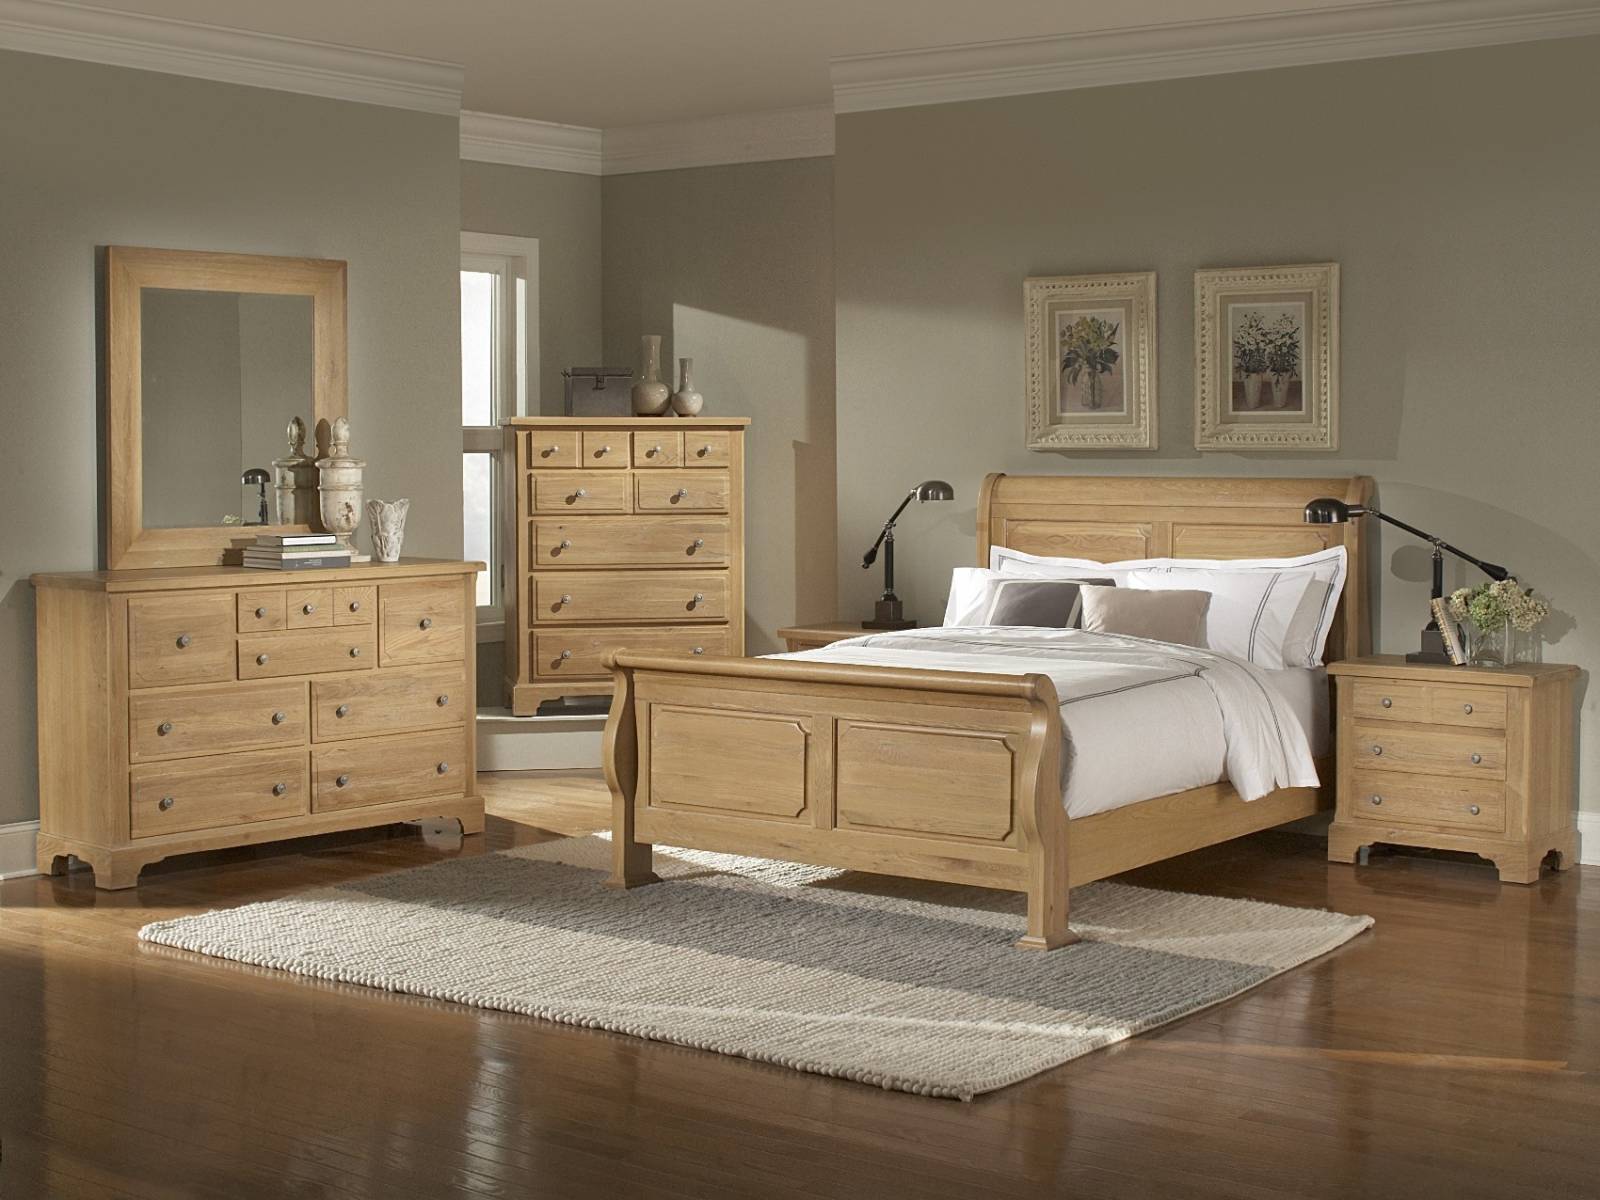 Light Wood Bedroom Furniture